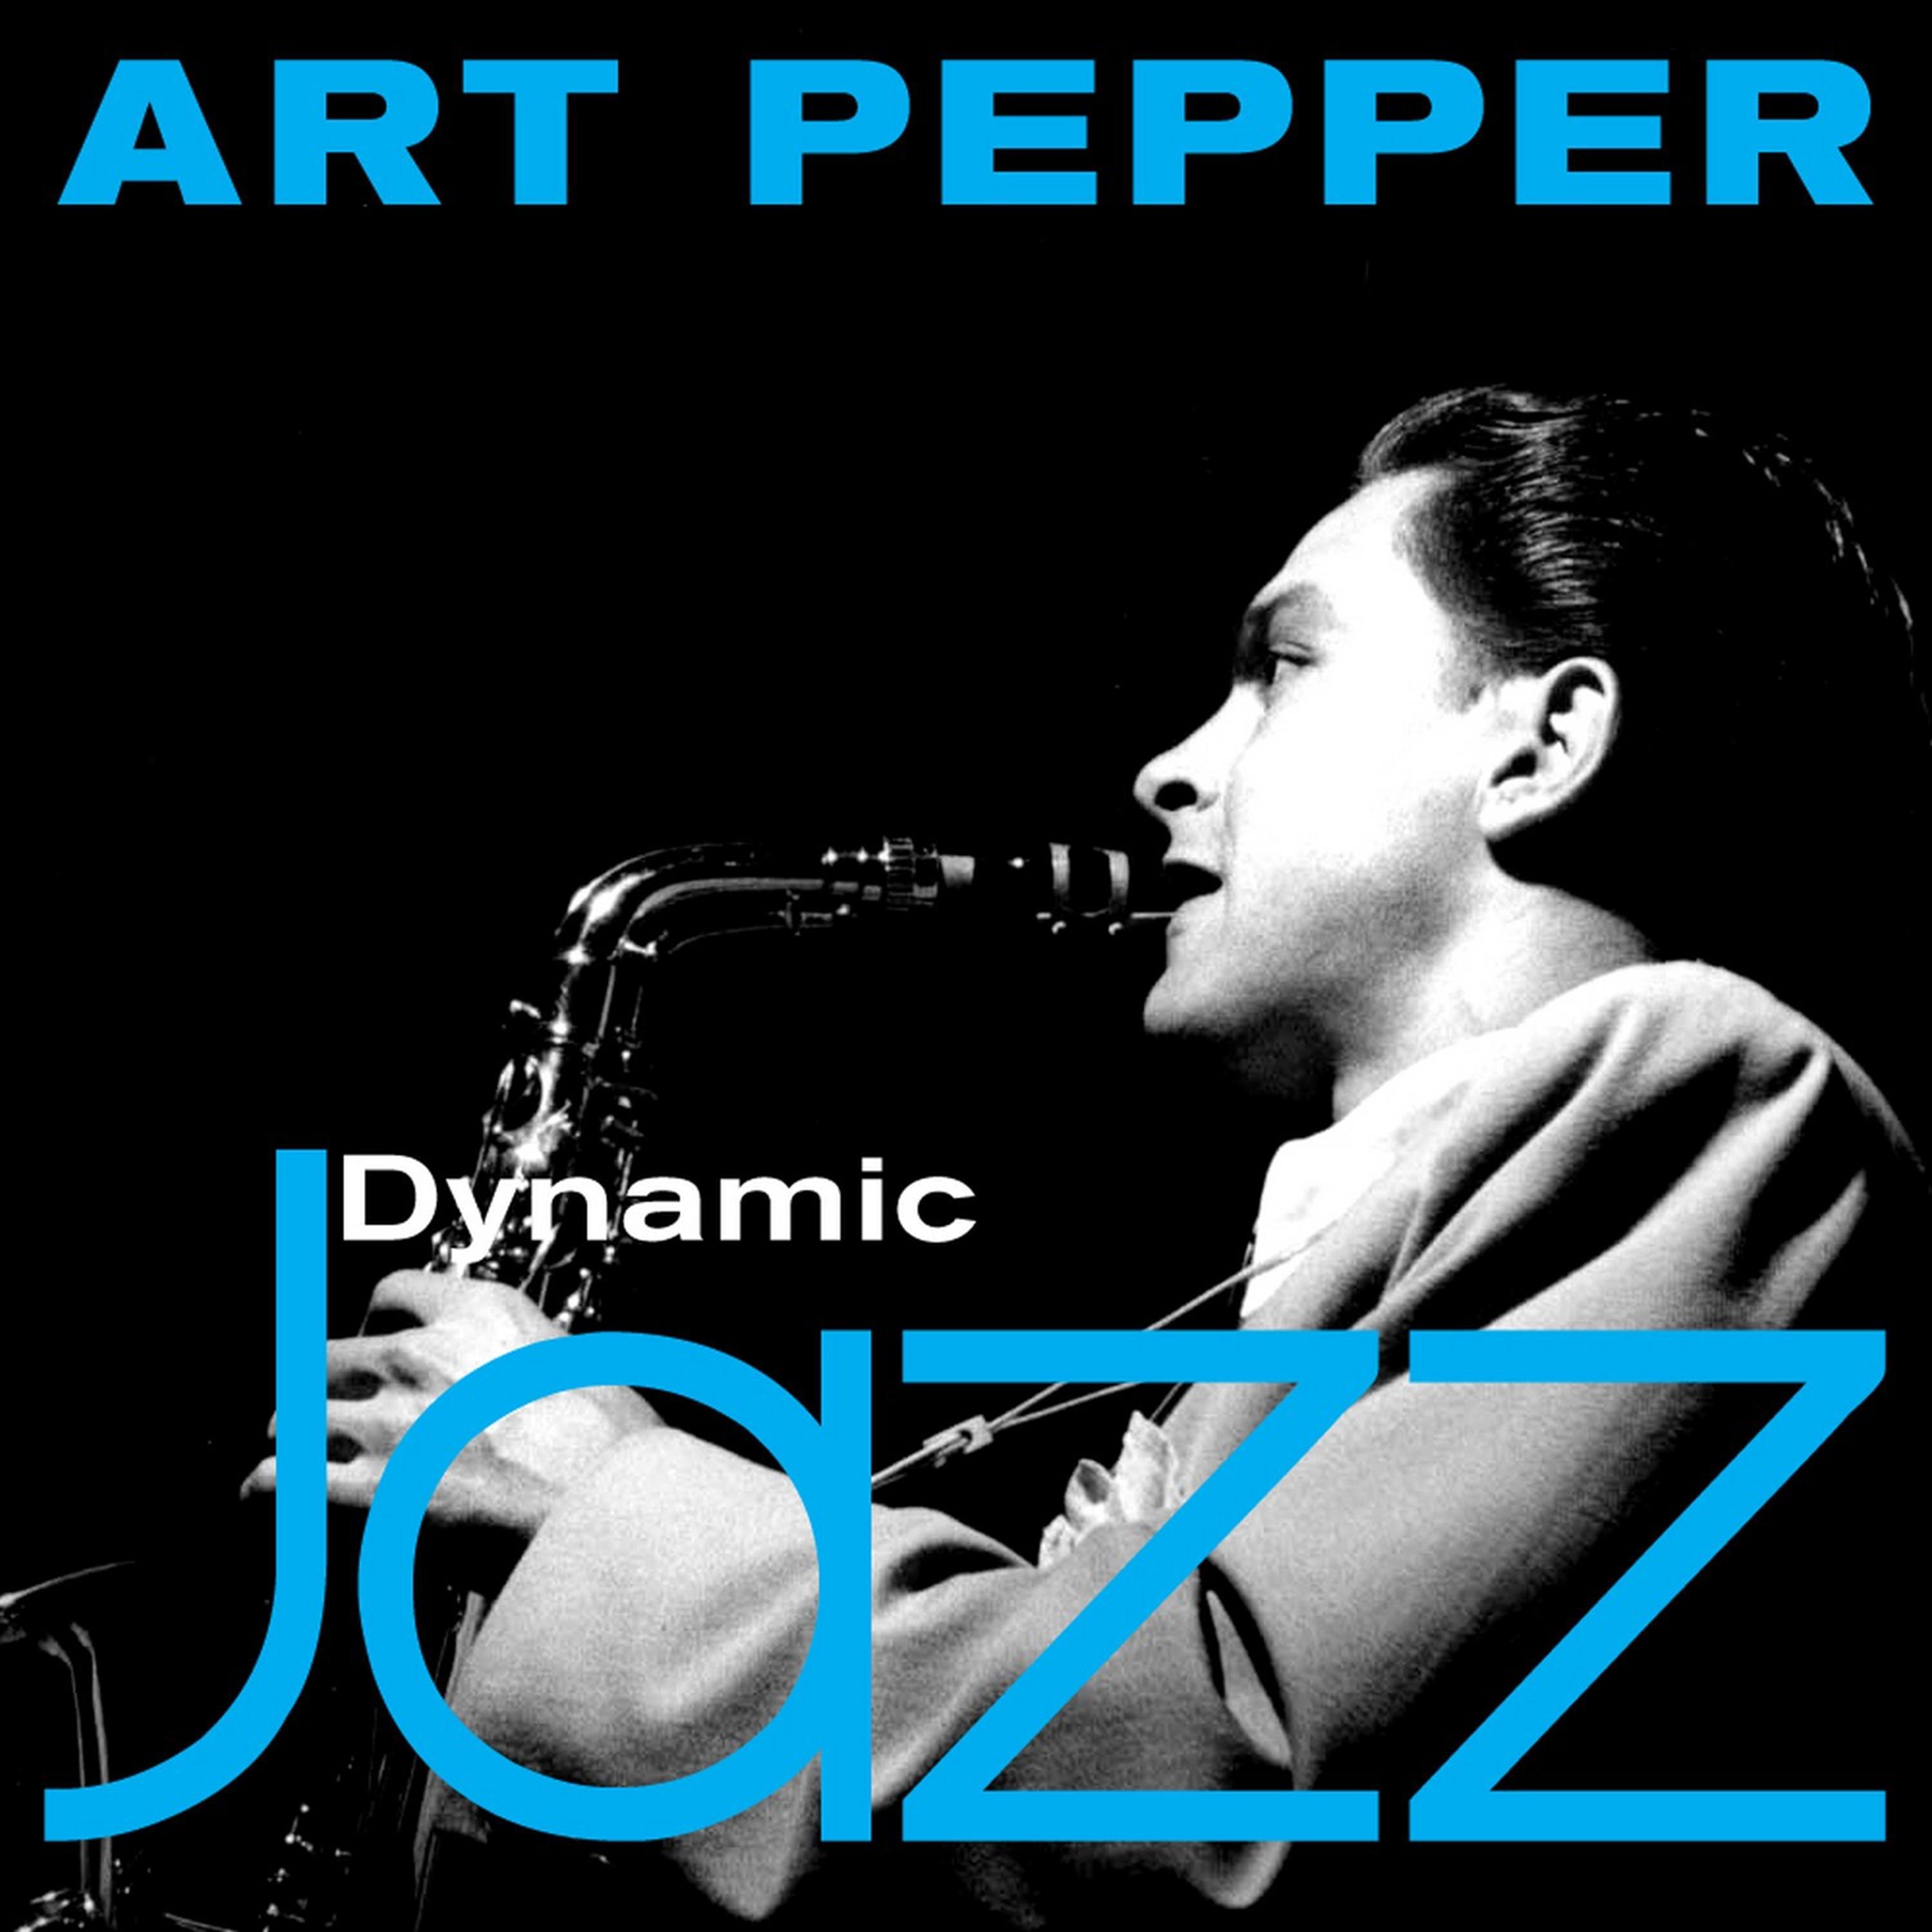 Art pepper. Pepper Art. Pepe Art. Арт Пеппер саксофонист. Cover Art Pepper the intimate Art Pepper.